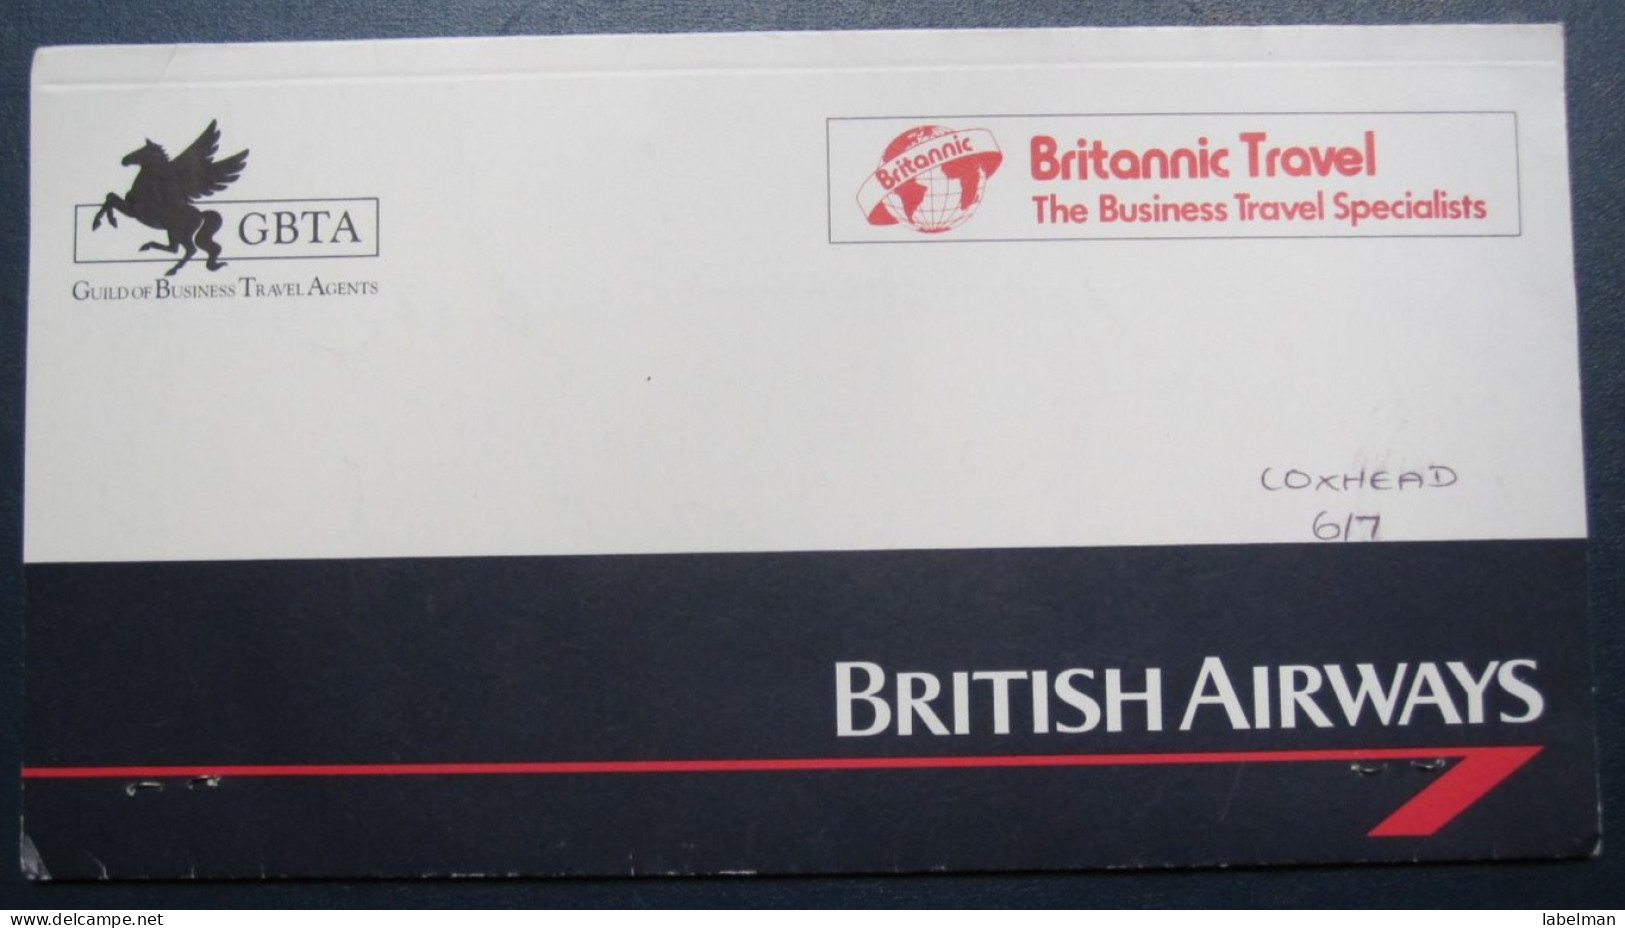 UK UNITED KINGDOM ENGLAND BRITISH AIRWAYS AIRLINE TICKET HOLDER BOOKLET VIP TAG LUGGAGE BAGGAGE PLANE AIRCRAFT AIRPORT - Wereld